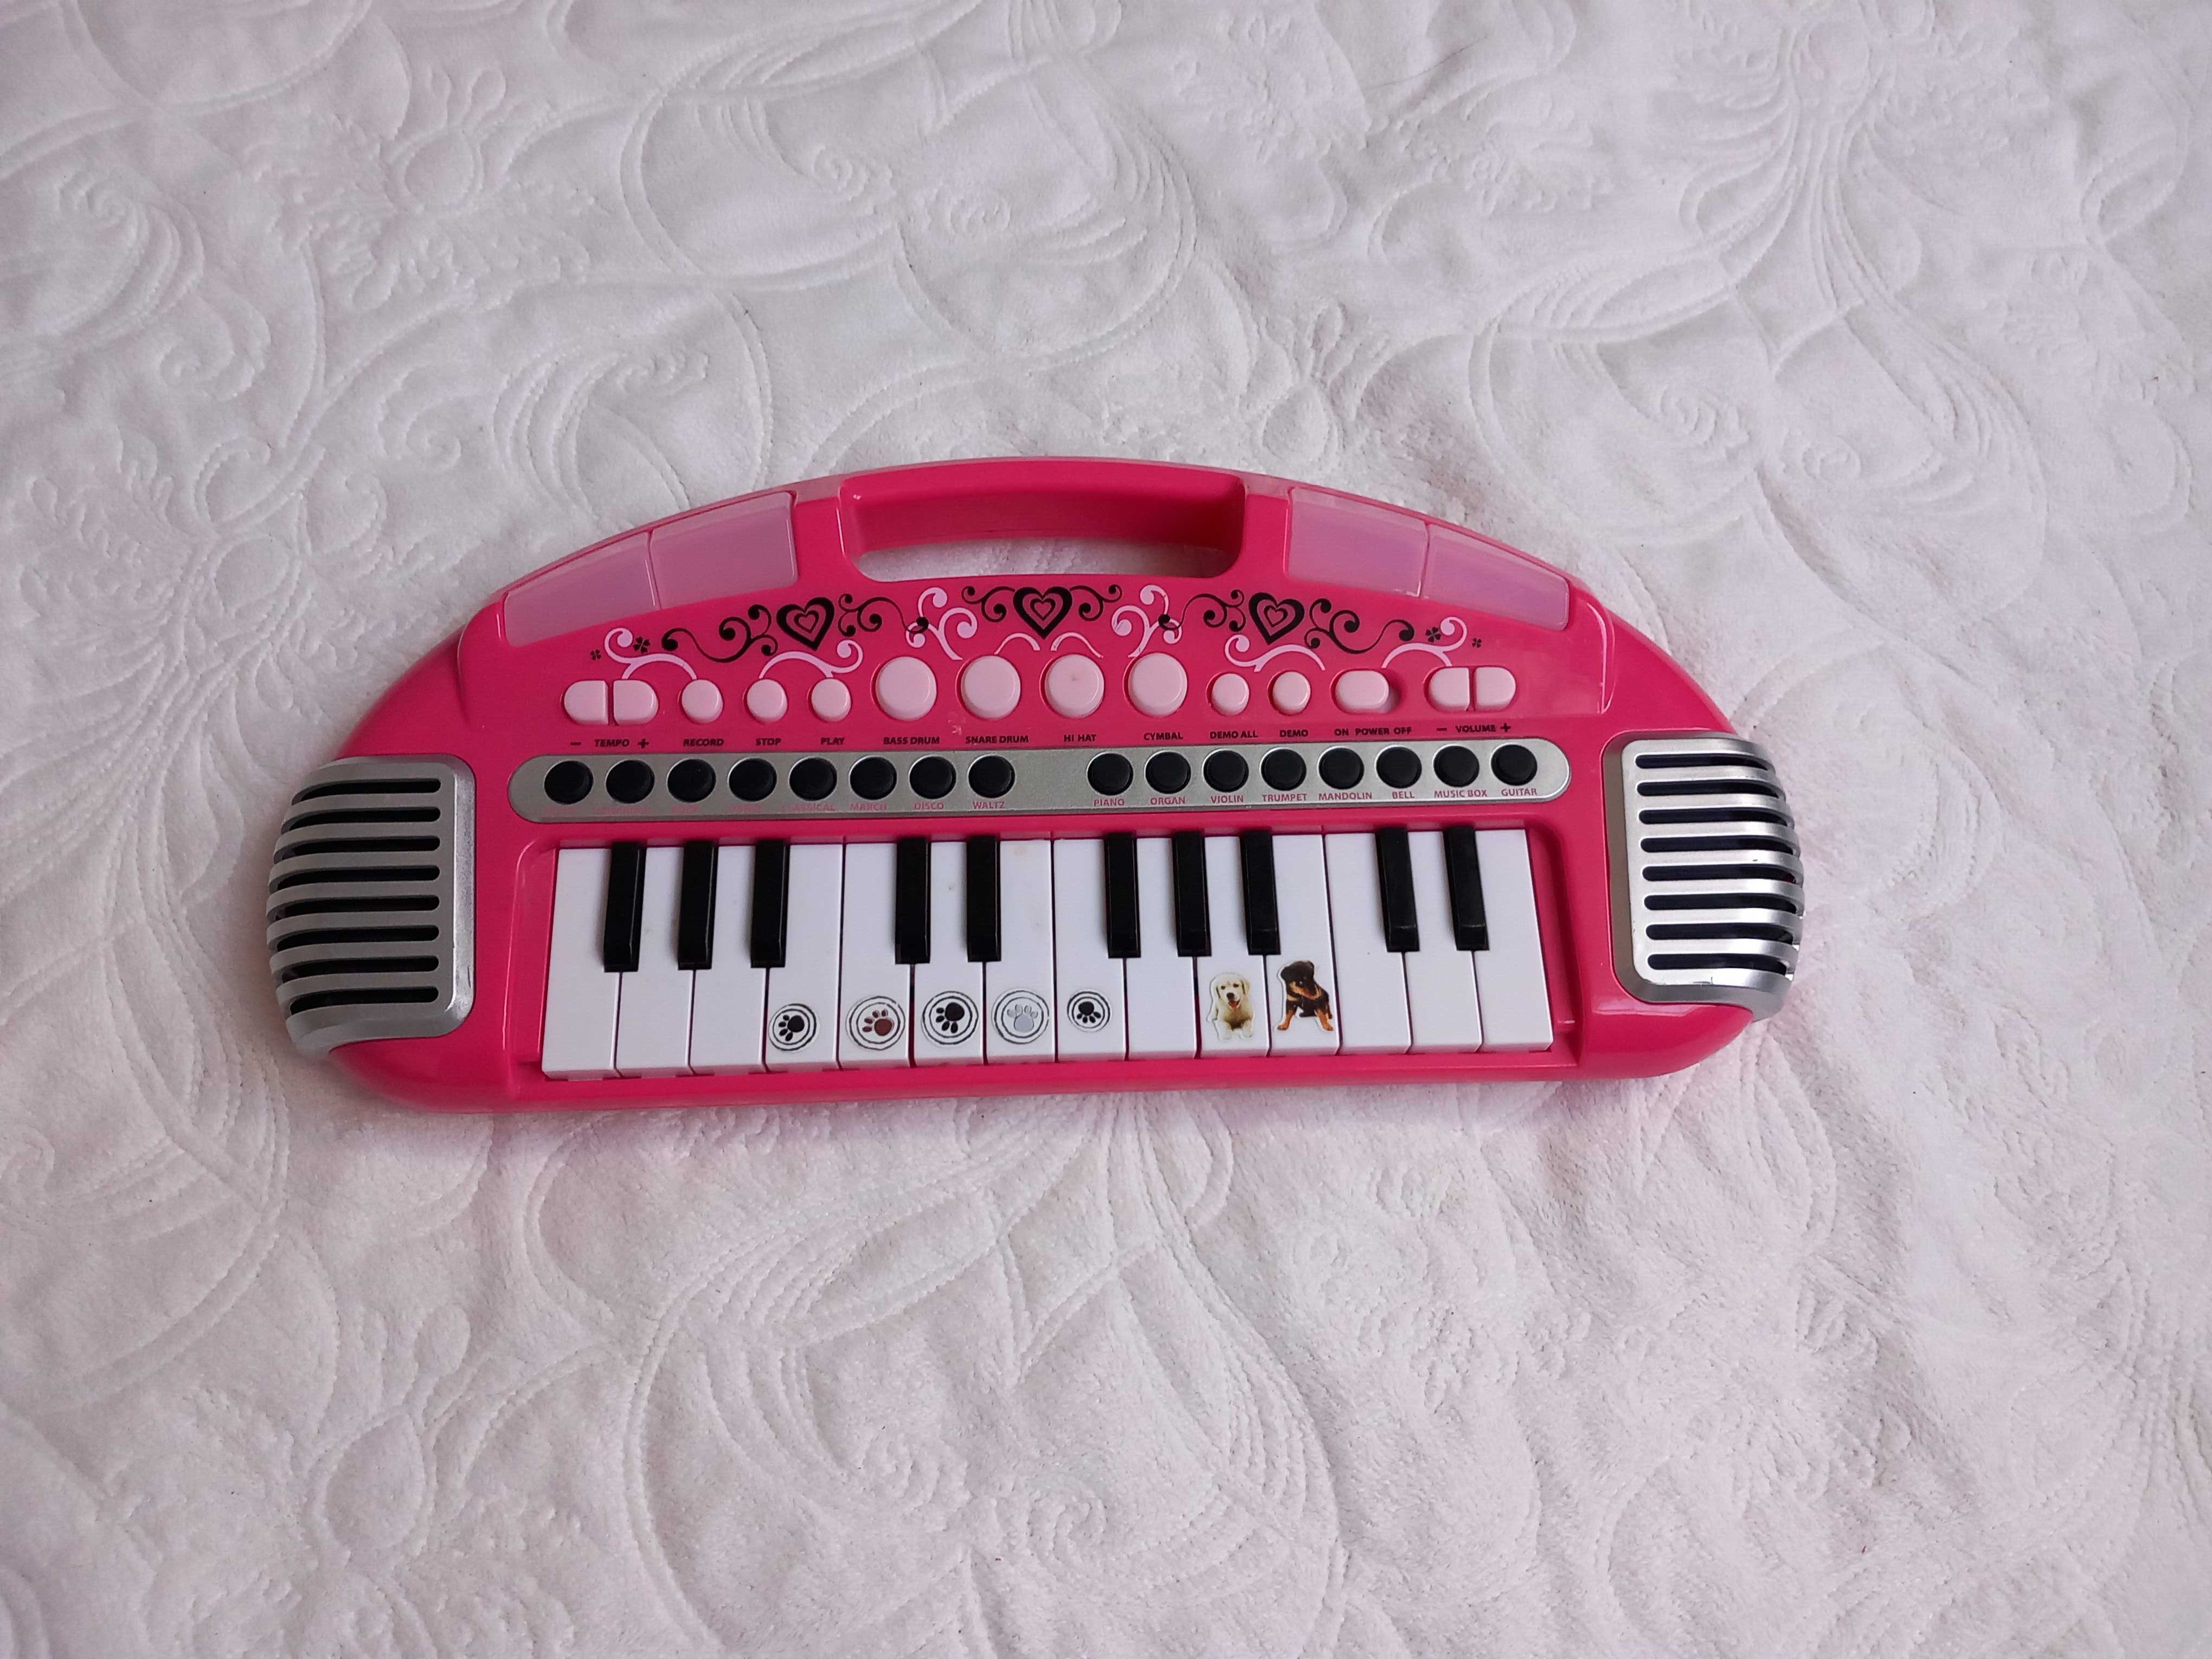 Organy keyboard mp3 syntezator boombox różowy różne melodie